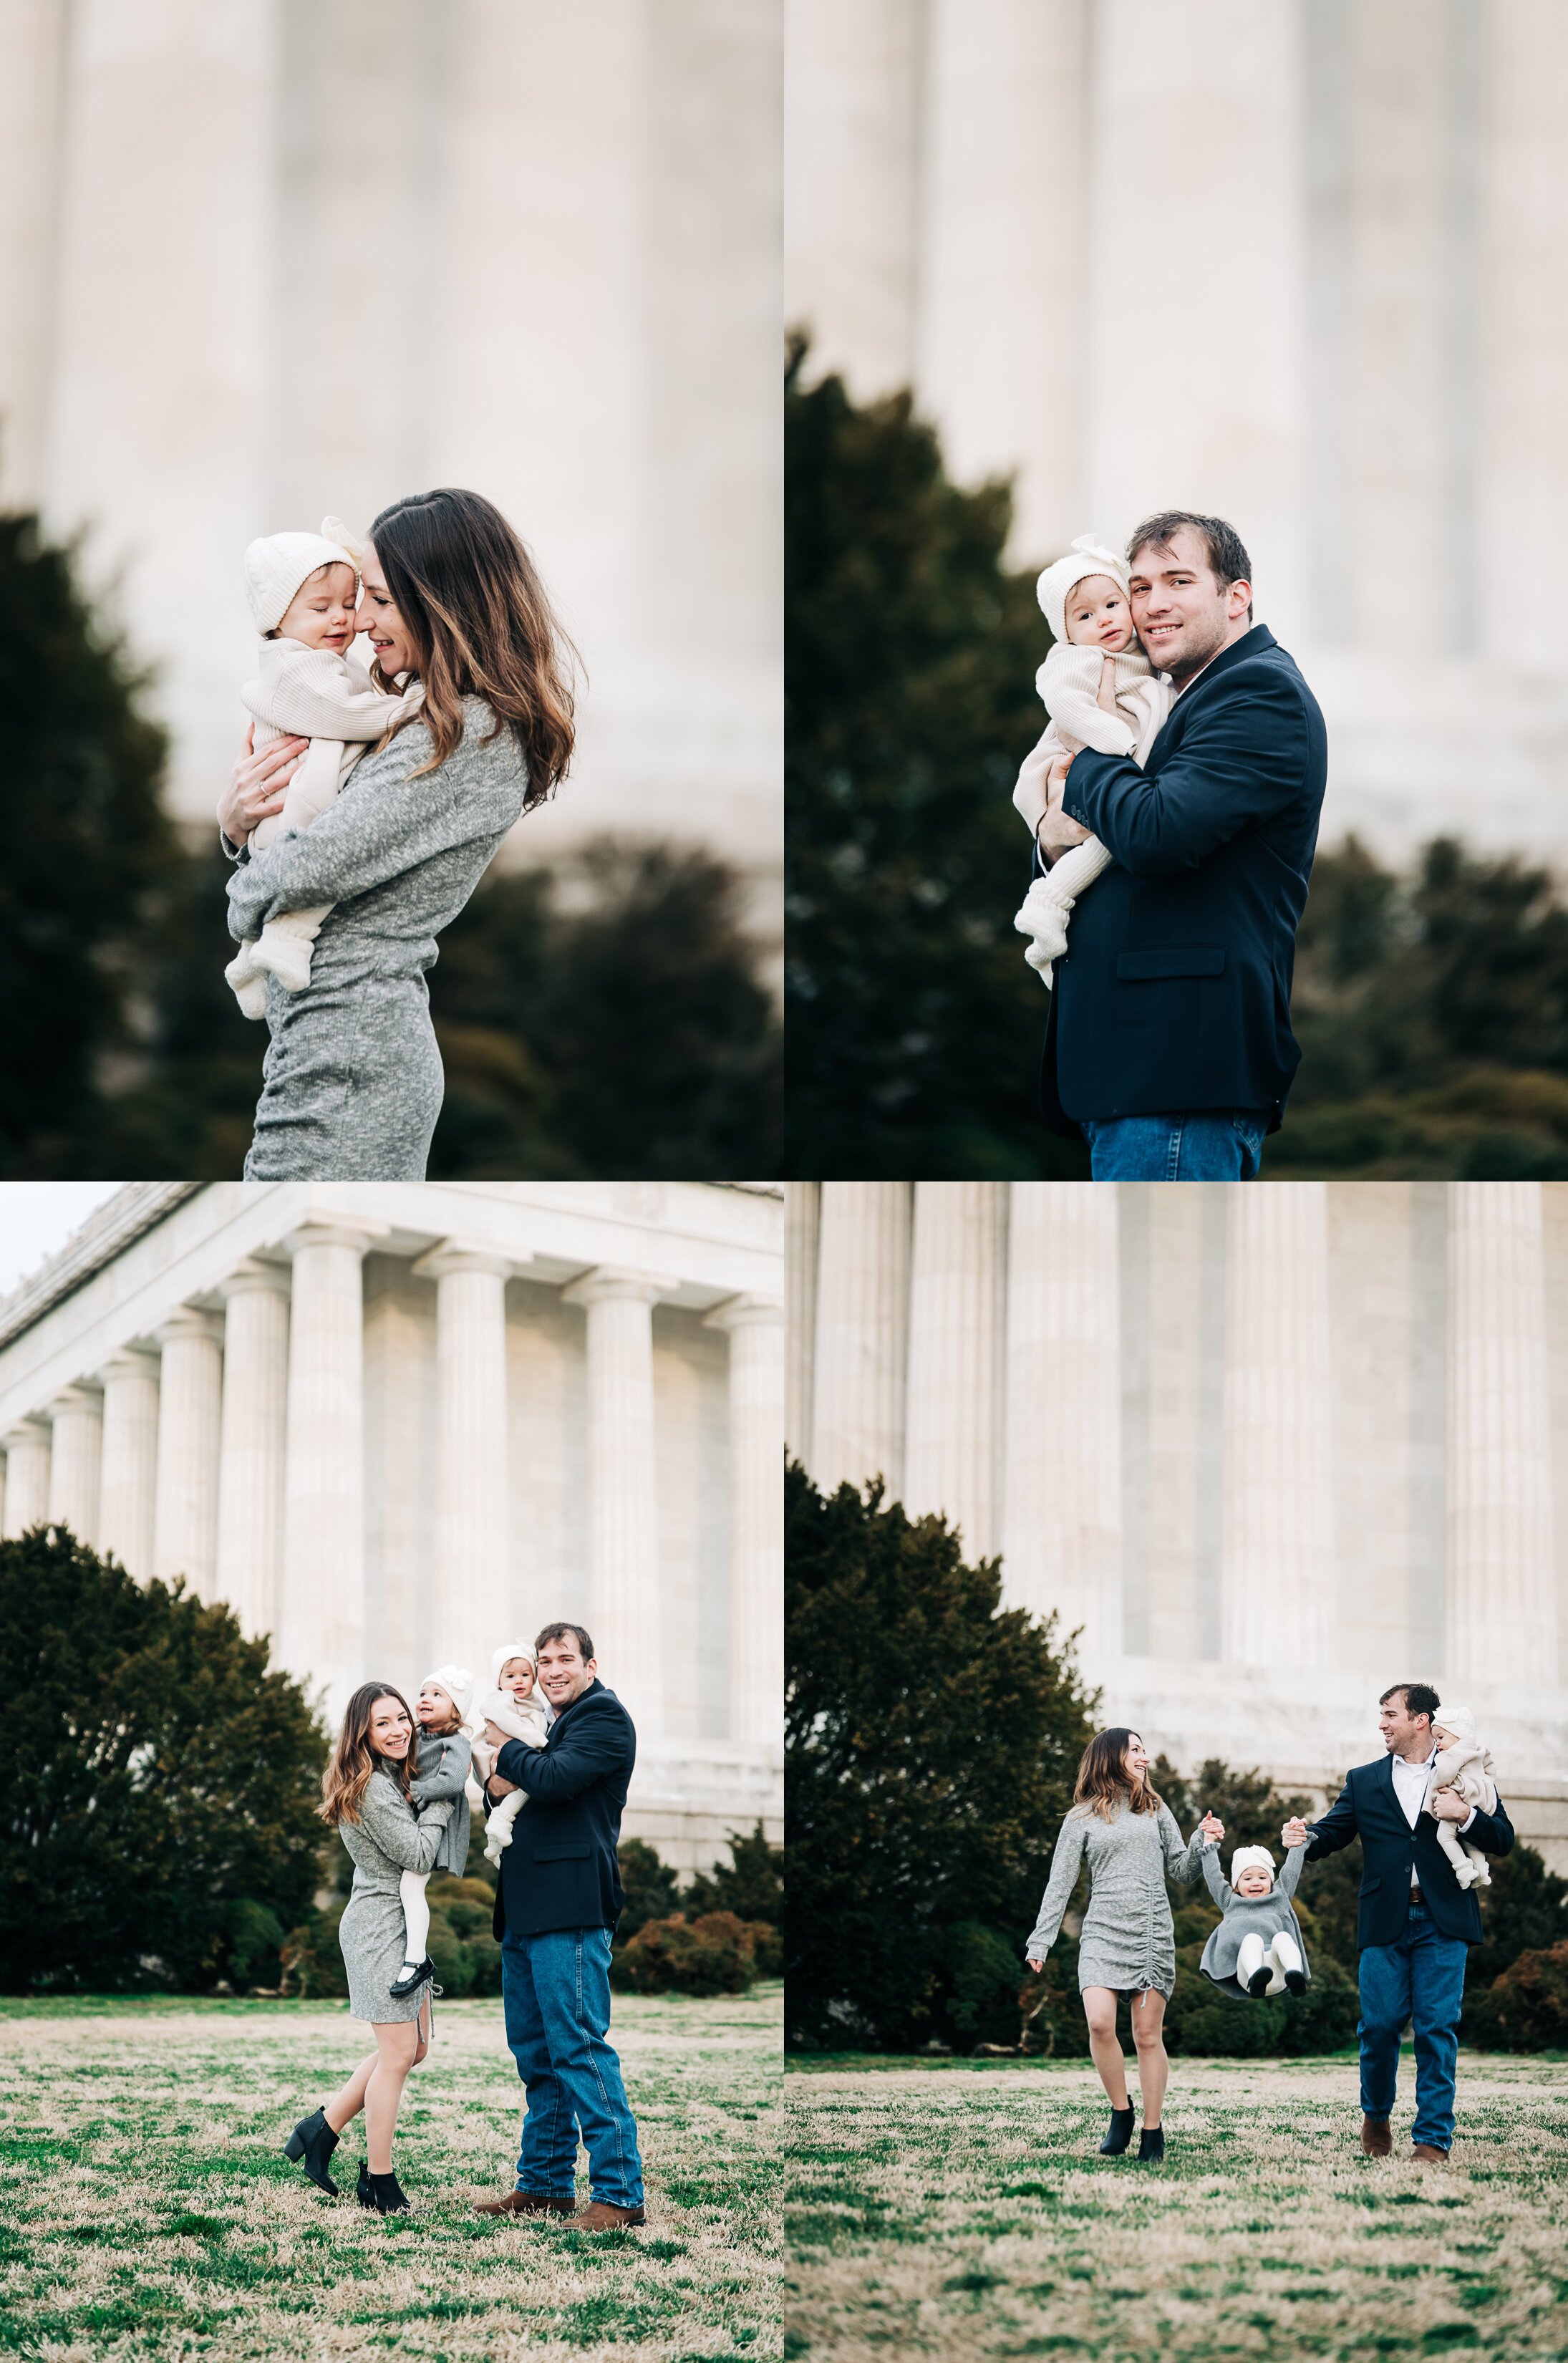 Family photography in Washington DC